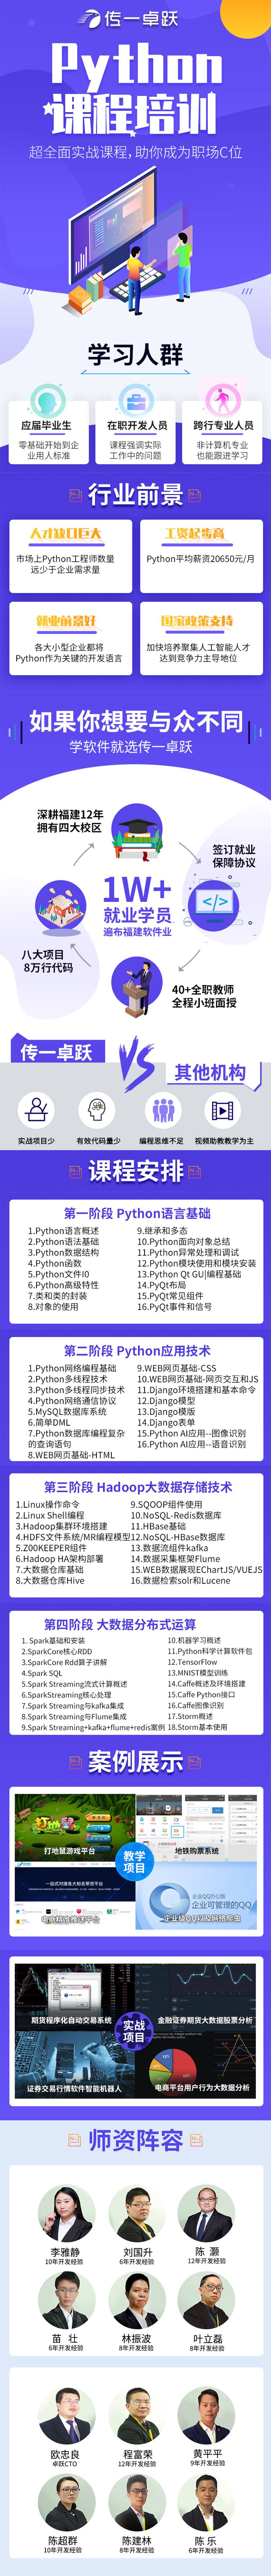 python软件开发培训班